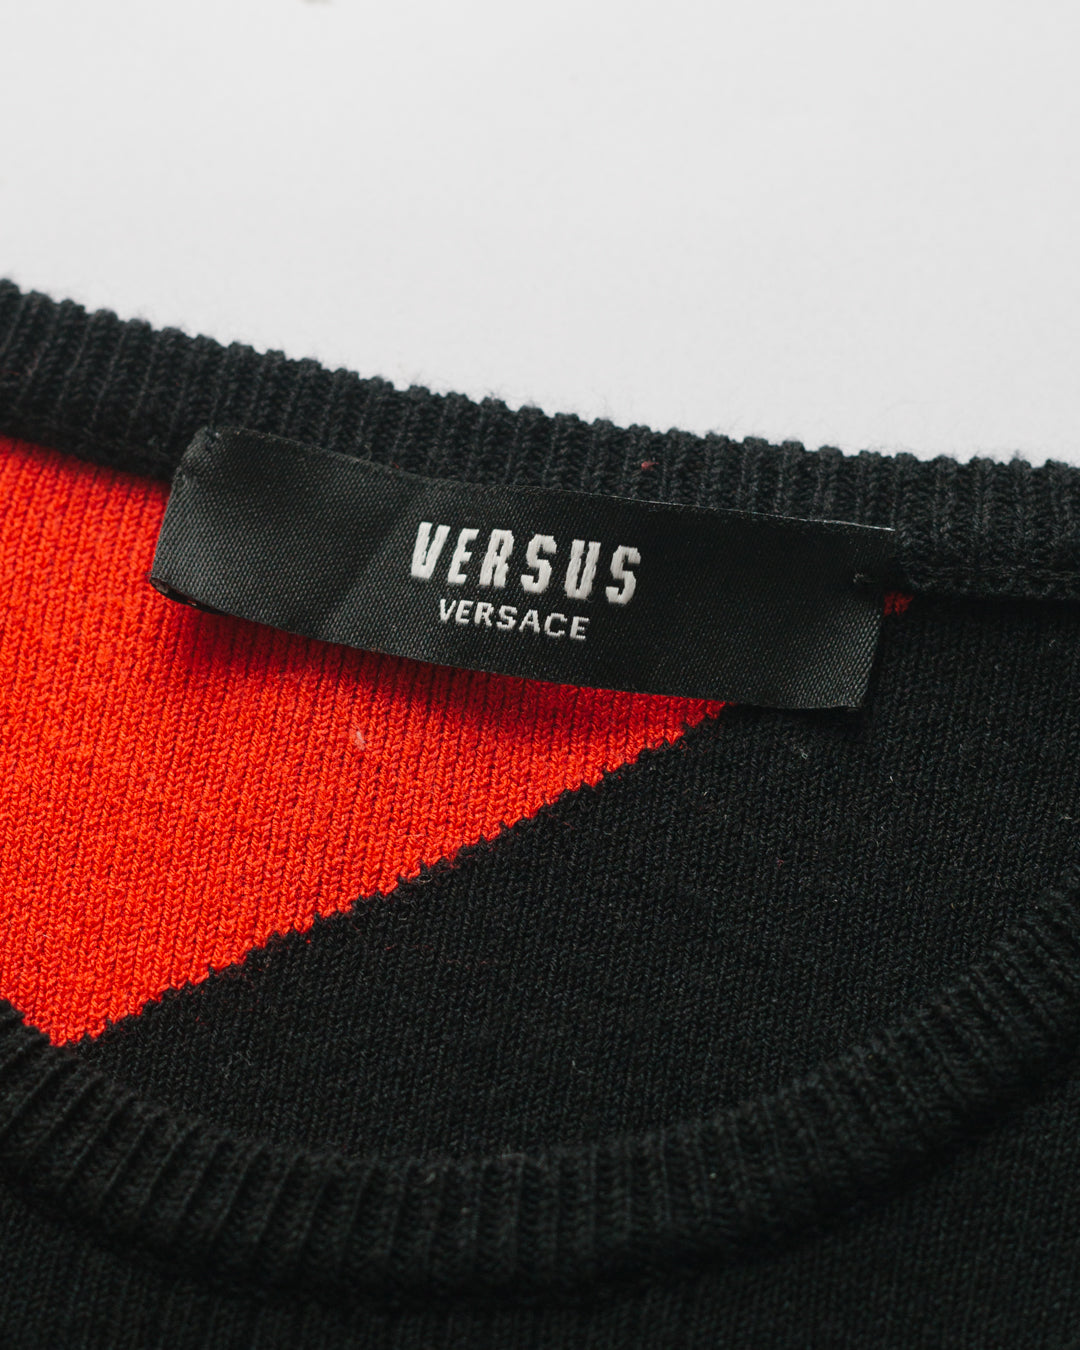 *Versus by Versace Knit Top